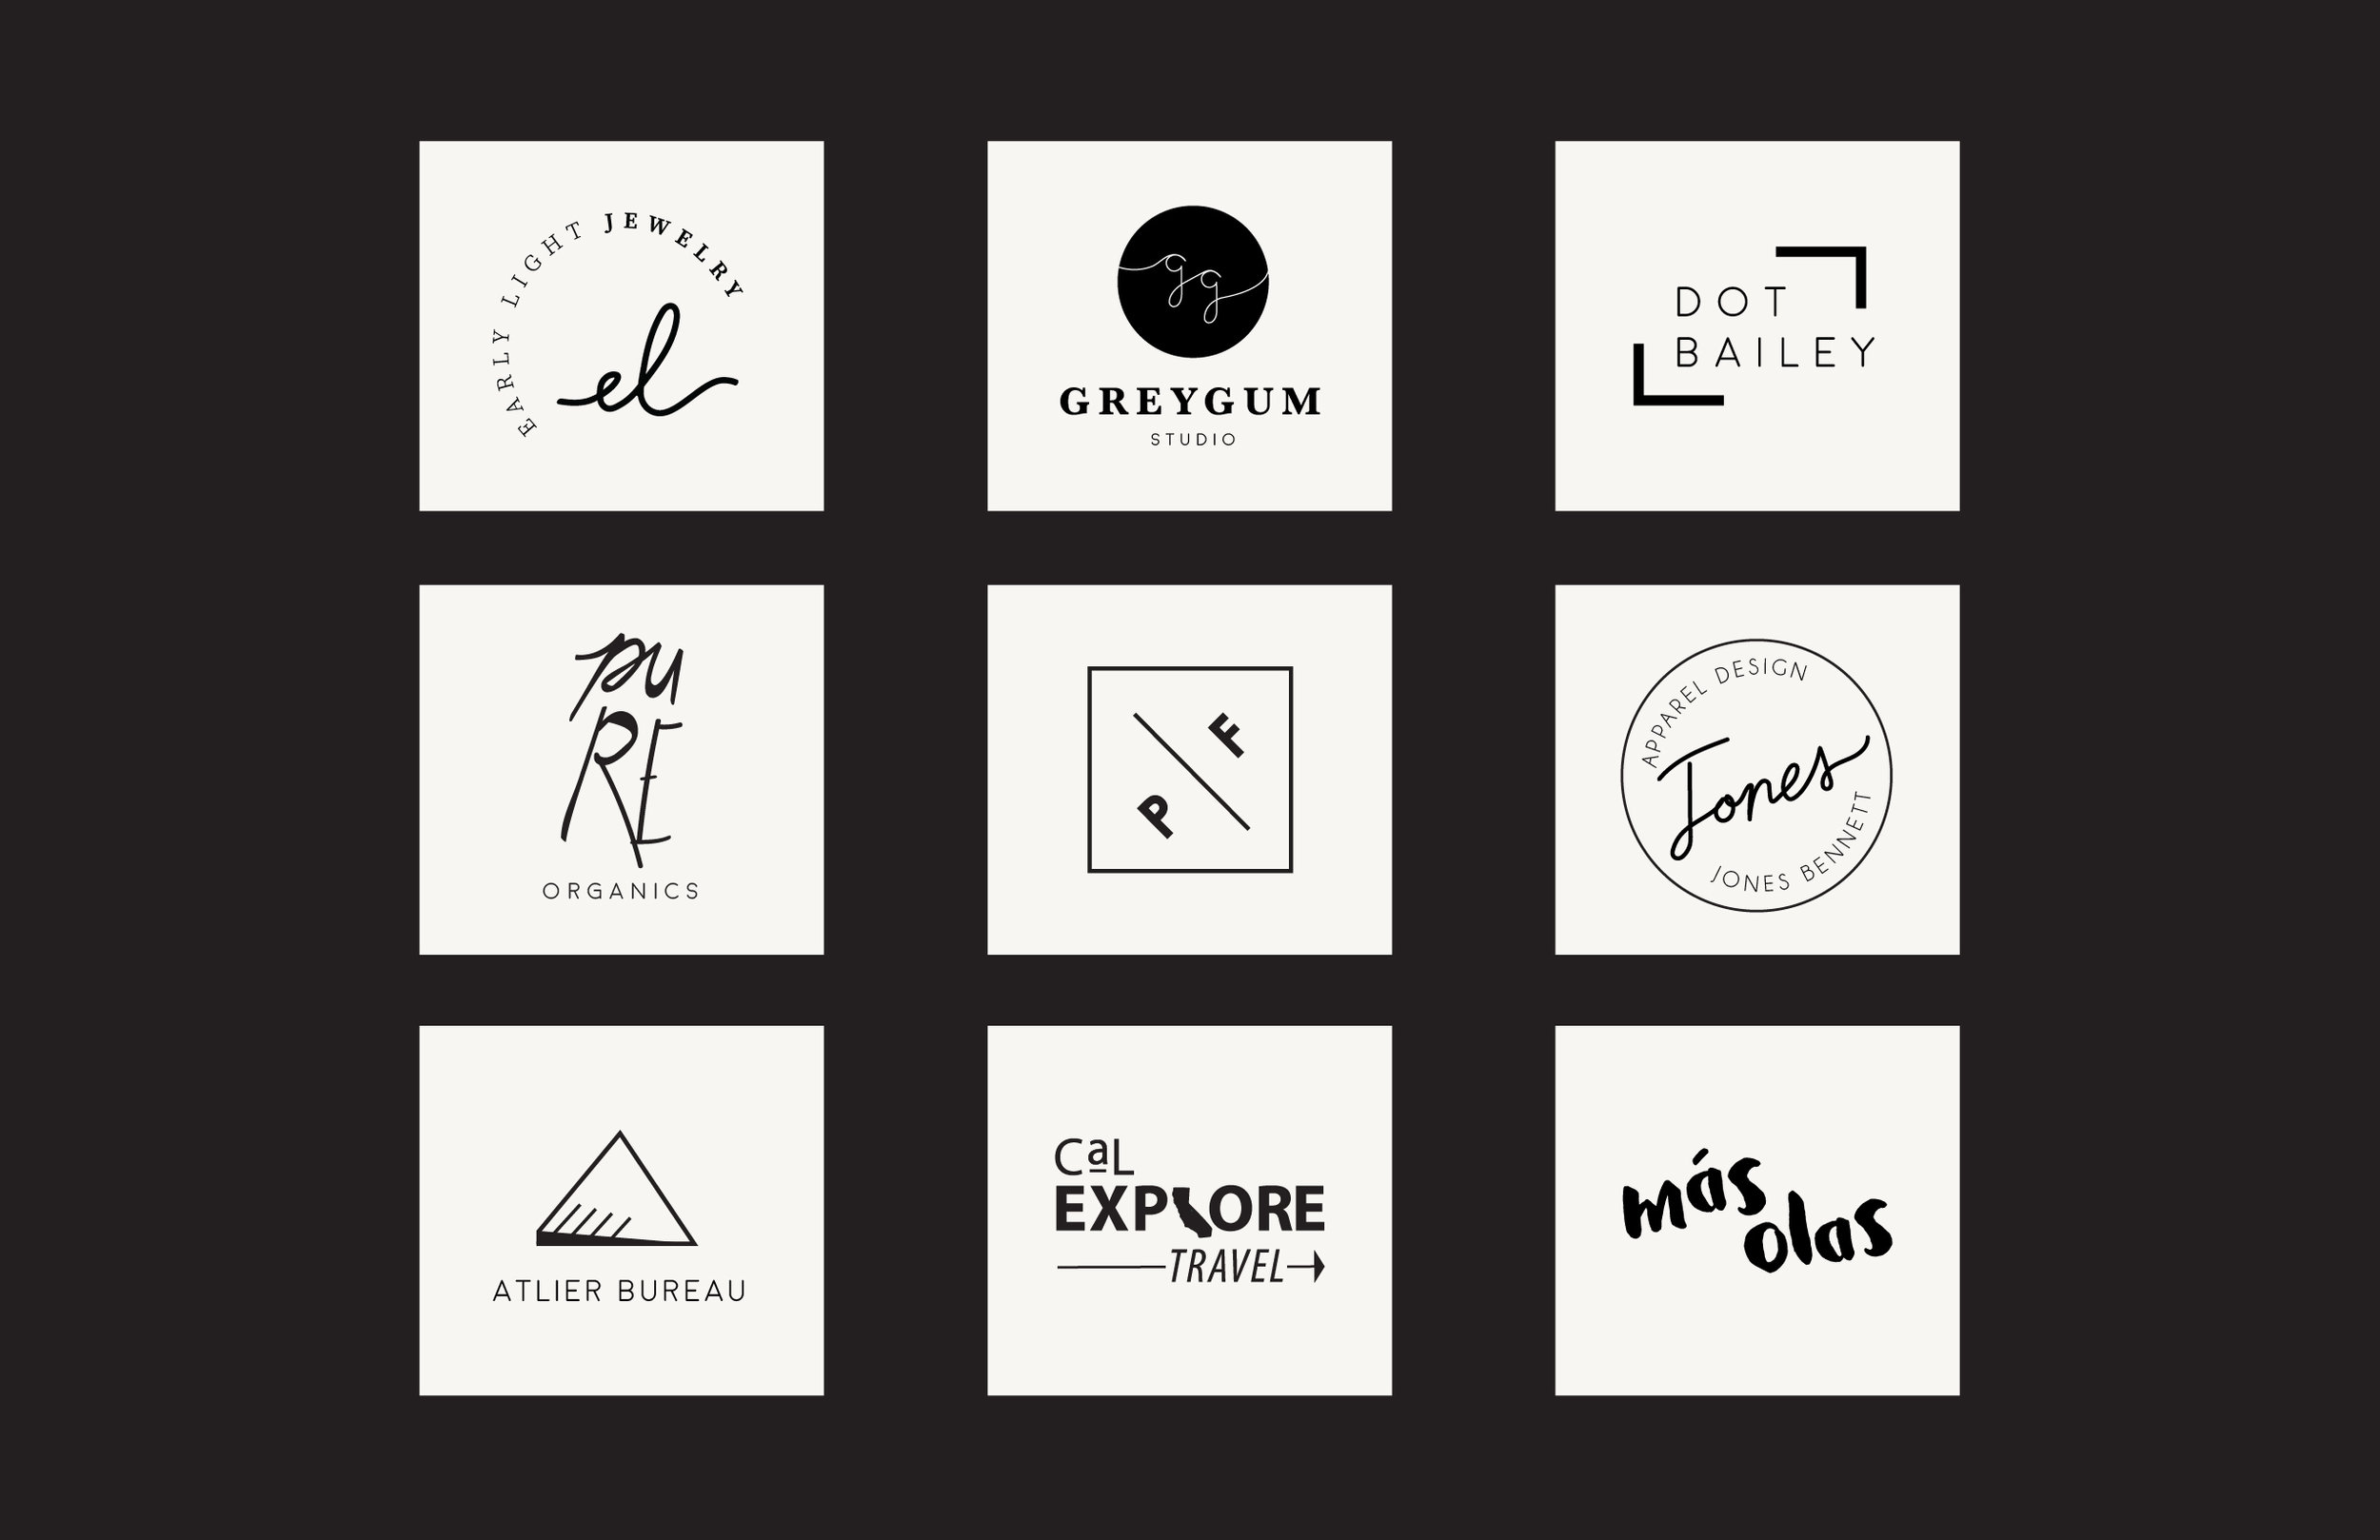 Logos_layout_for_portfolio-01.jpg